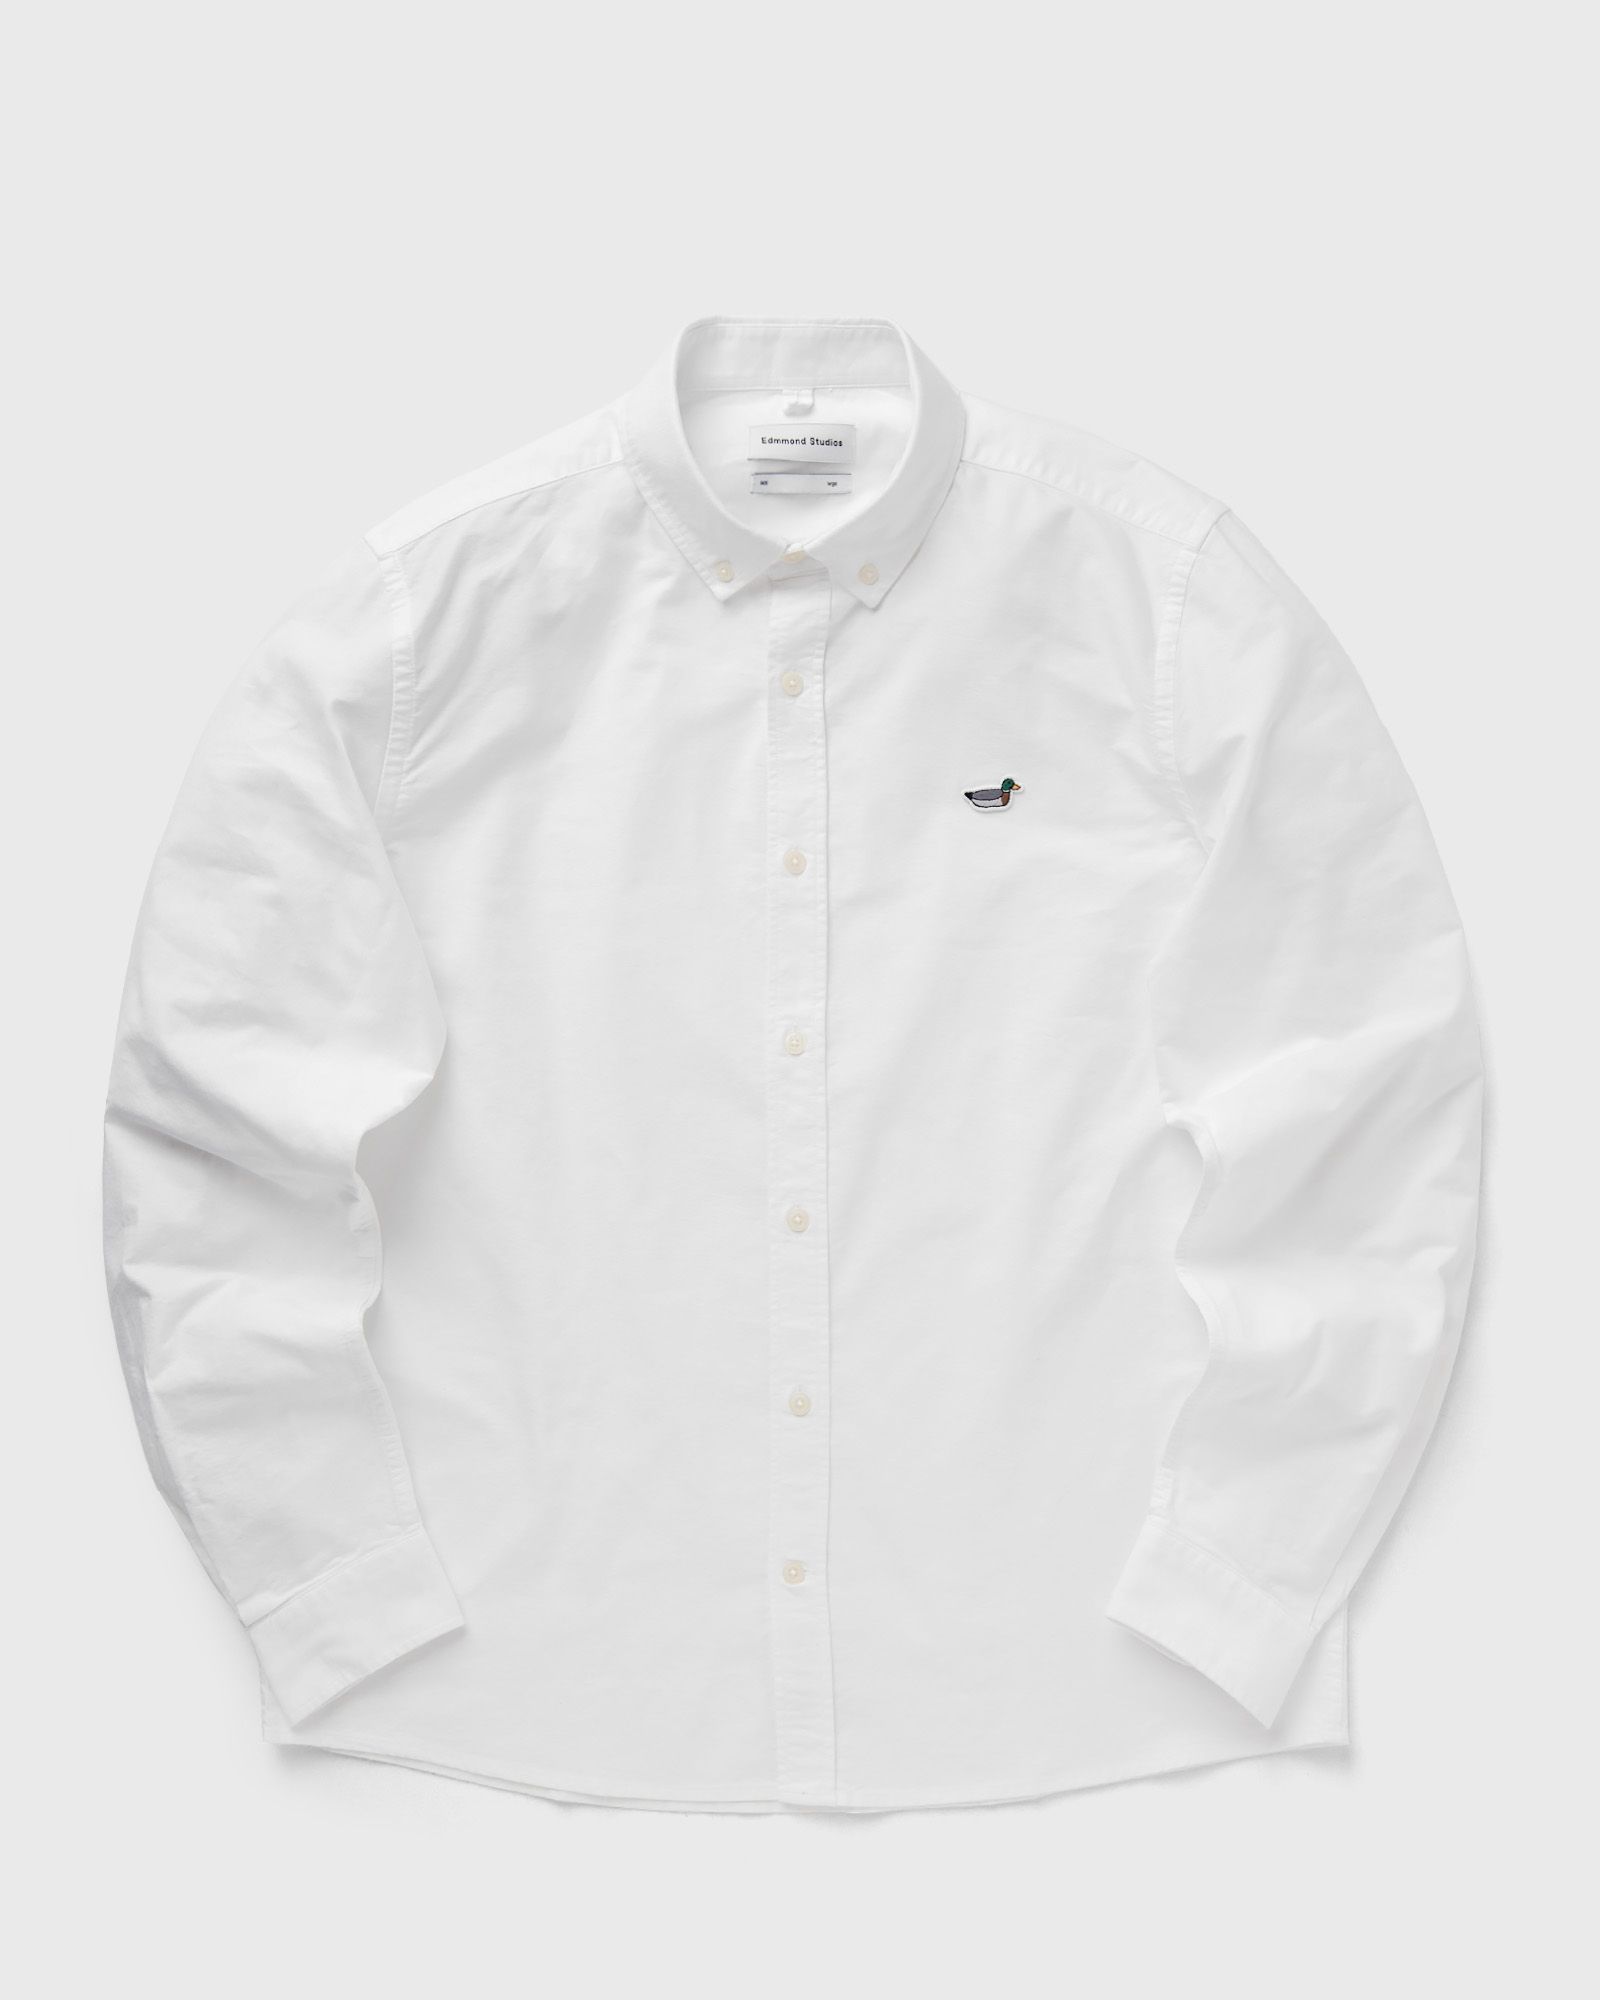 Edmmond Studios - bd shirt duck edition men longsleeves white in größe:xxl